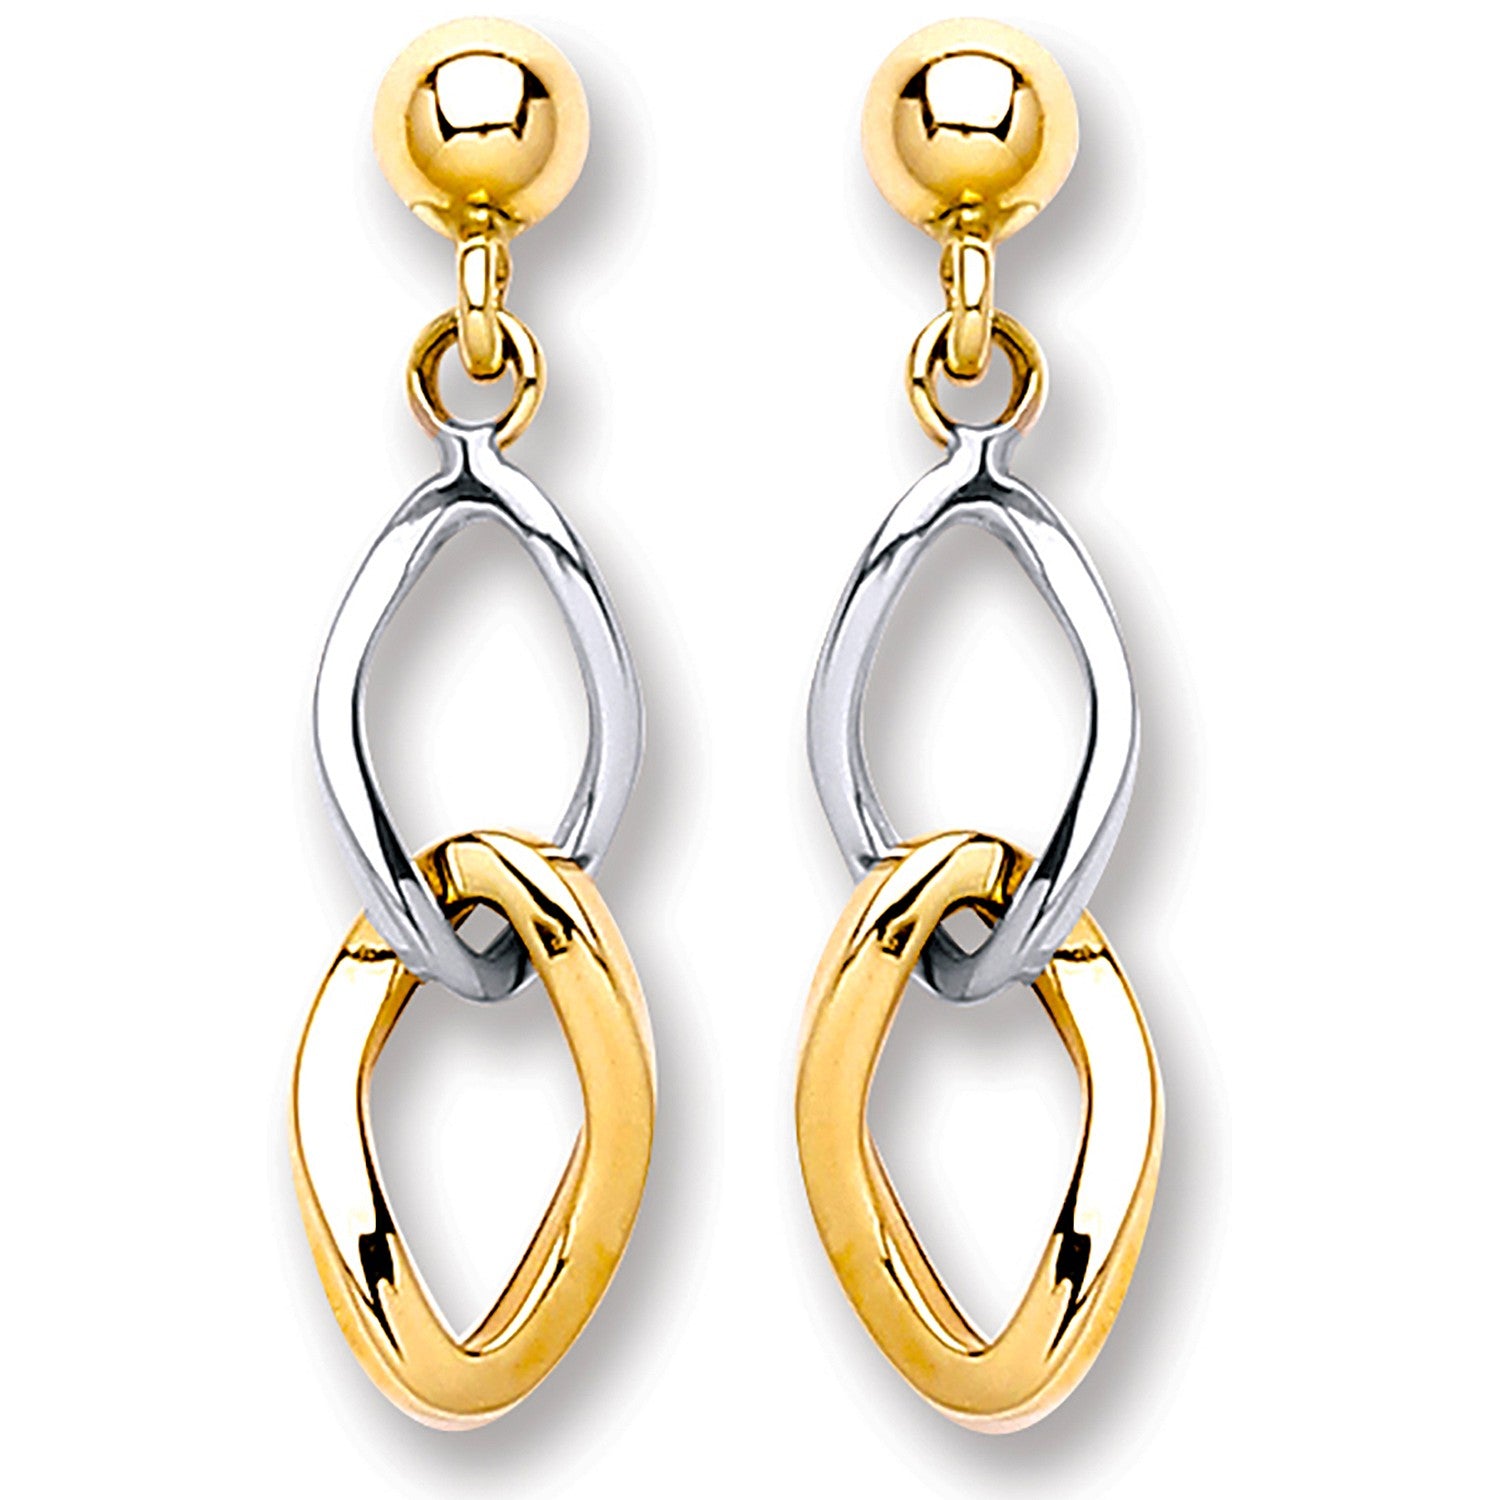 White Gold & Yellow Gold Drop Earrings